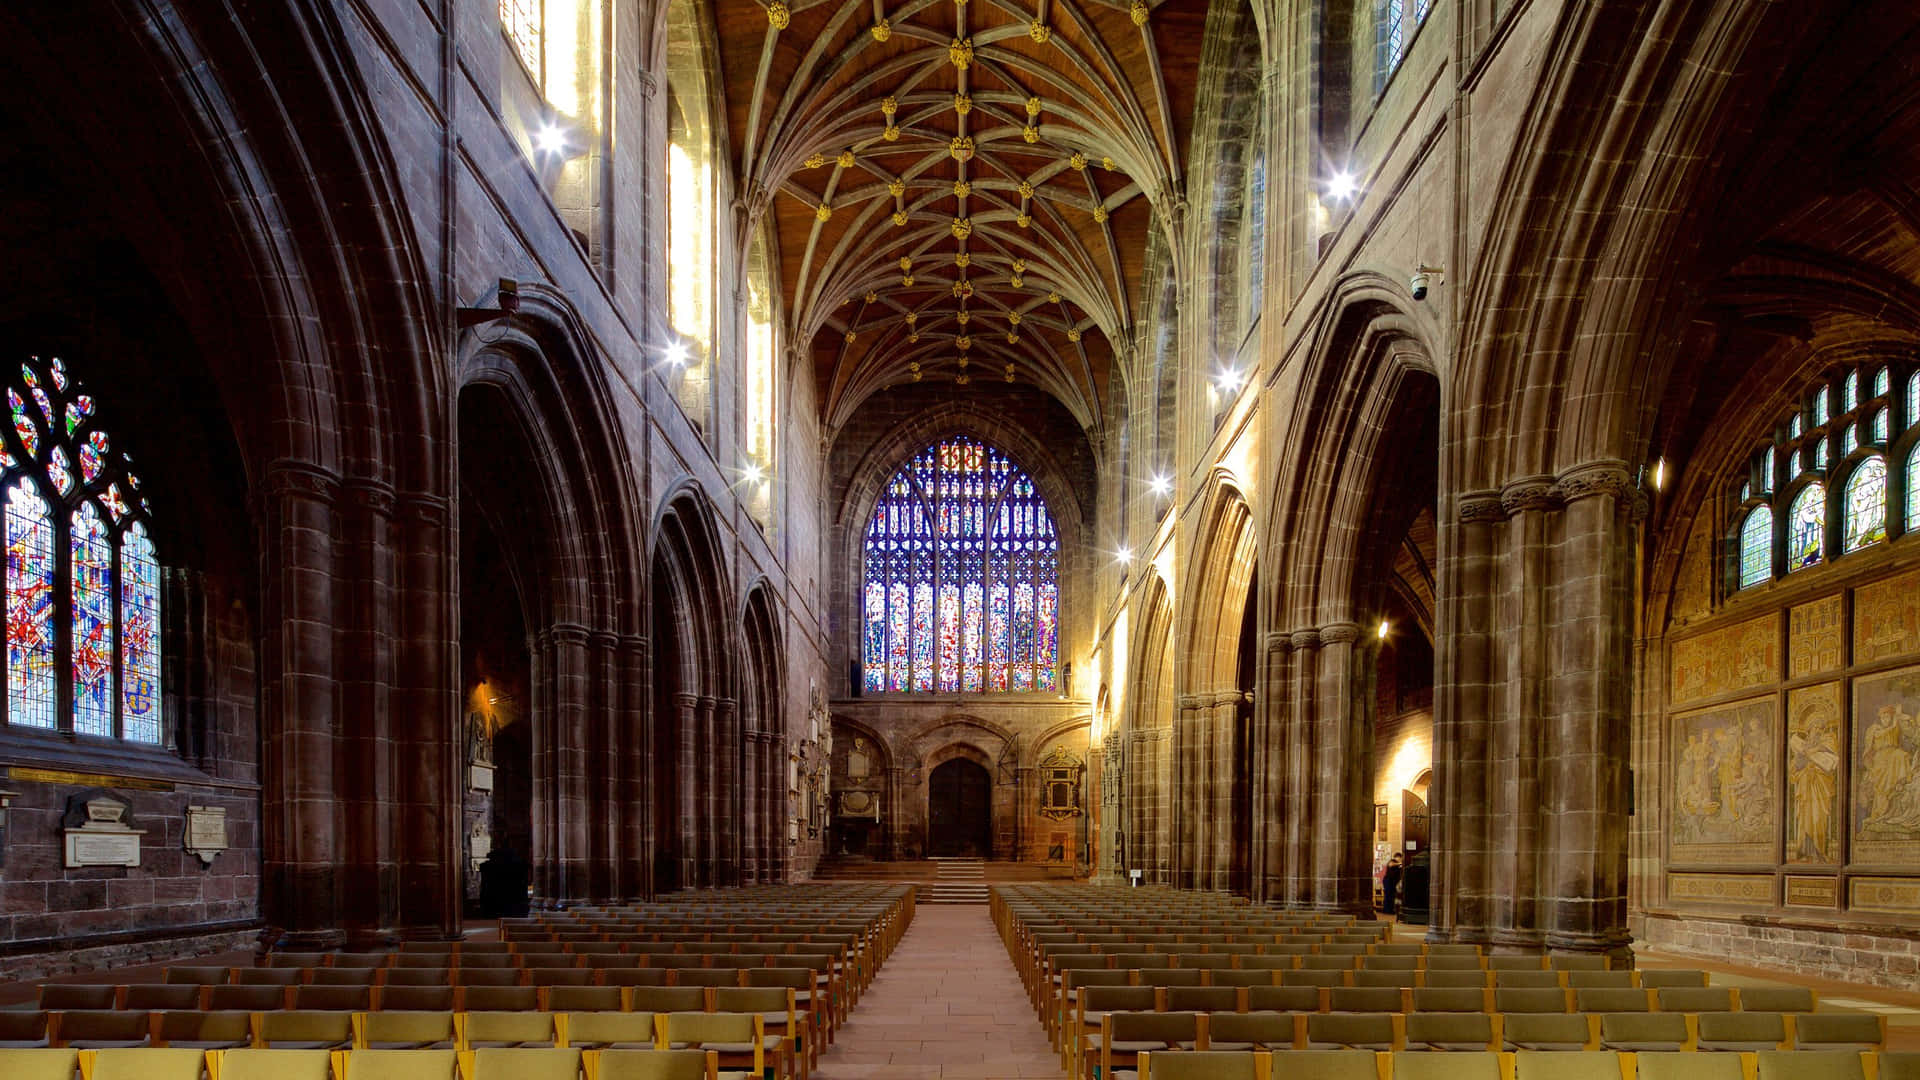 Chester Katedral 2560 X 1440 Wallpaper